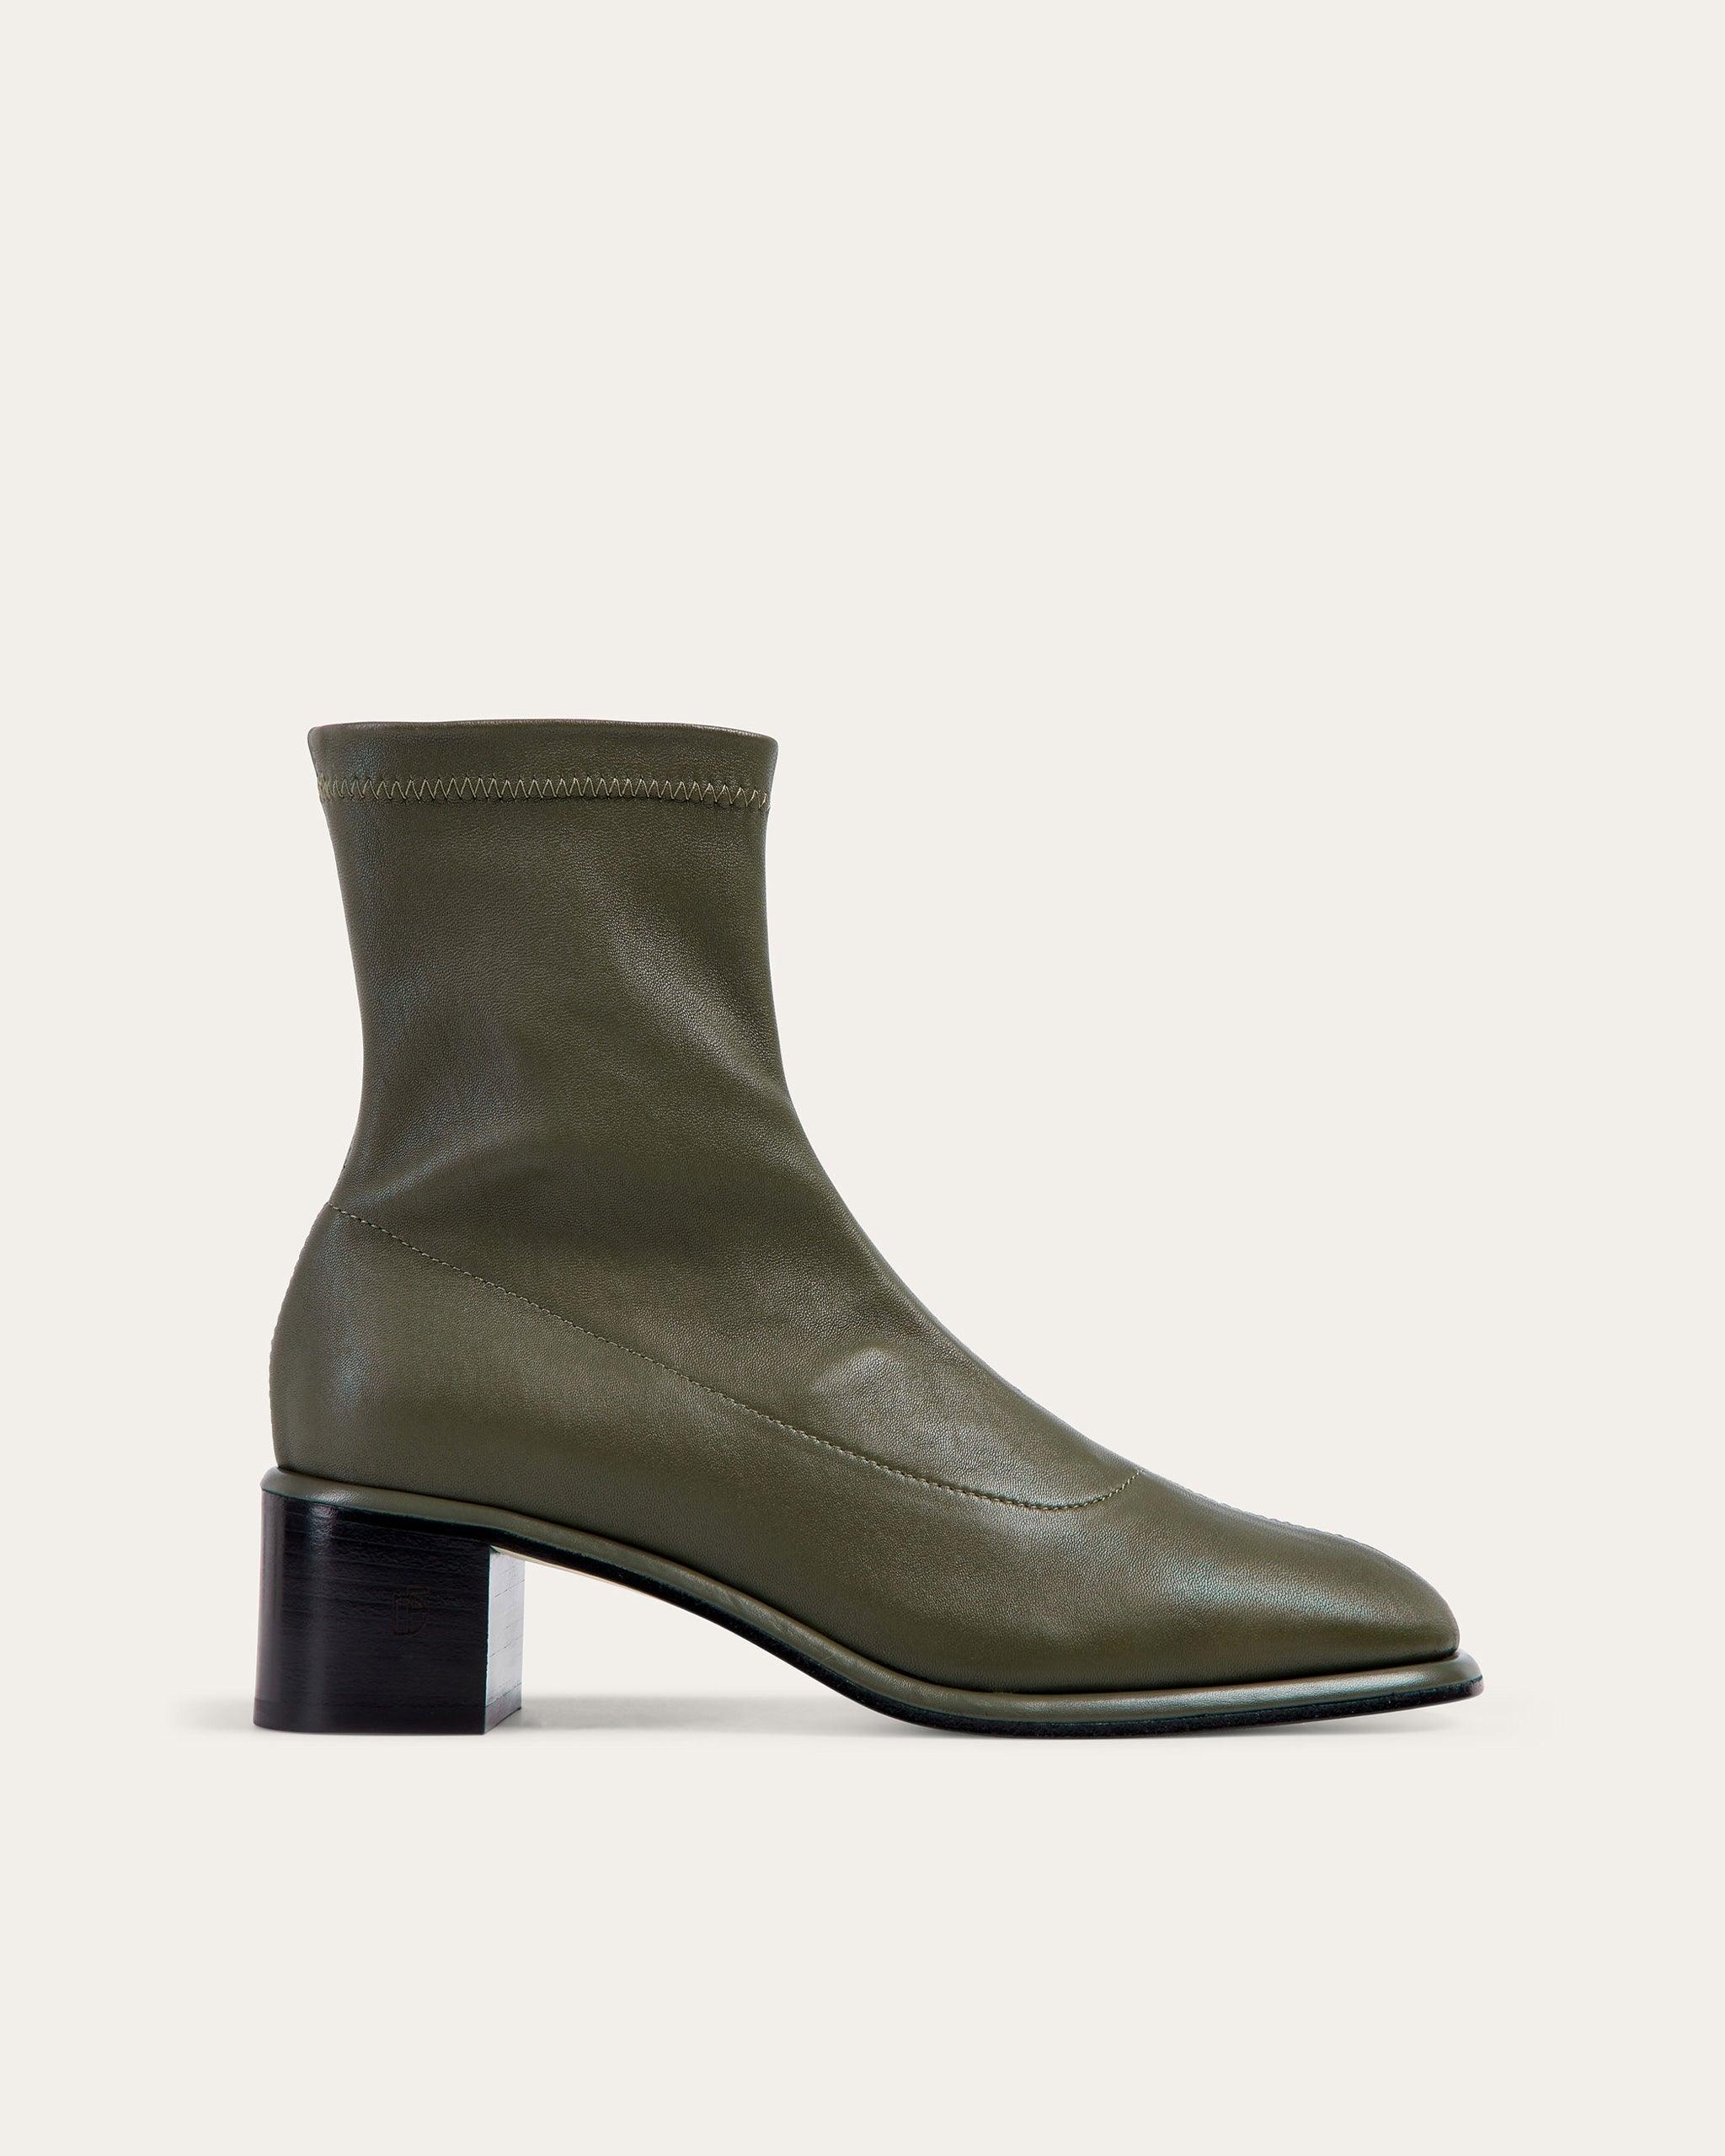 Image of Iris Boot, Military Green